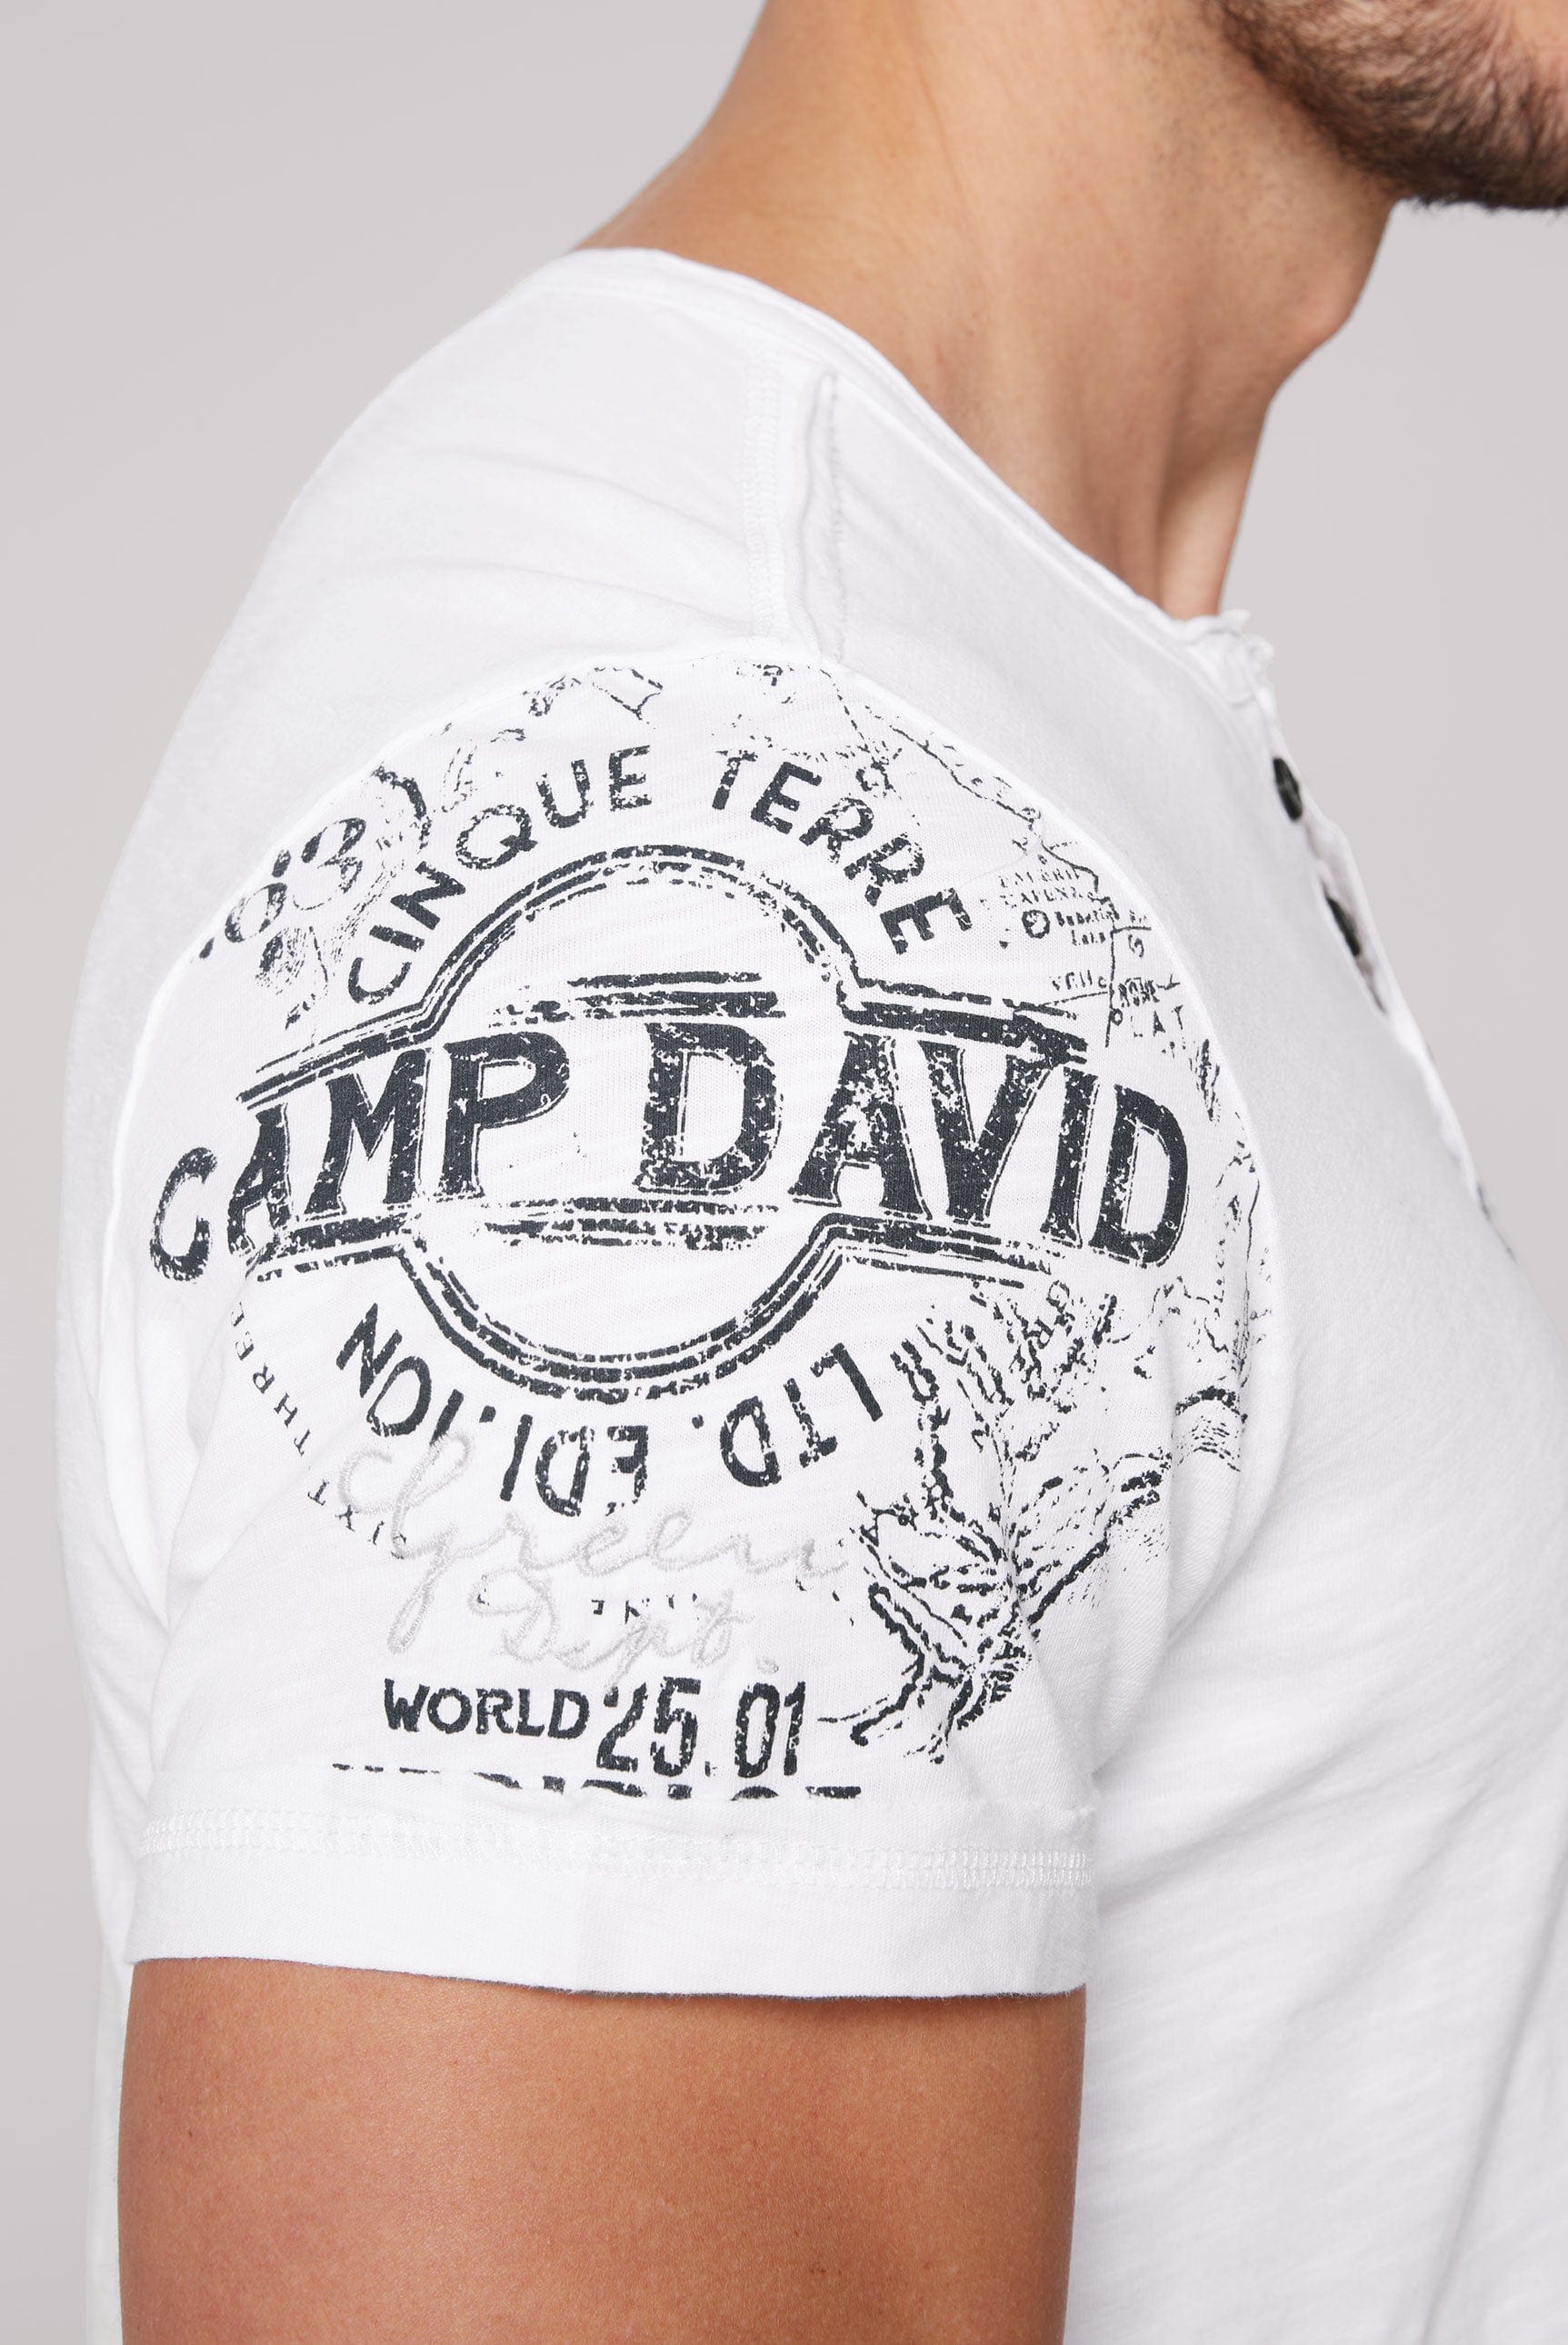 Camp David optic - Fashion button Chique Terre, white v-neck Stateshop T-Shirt